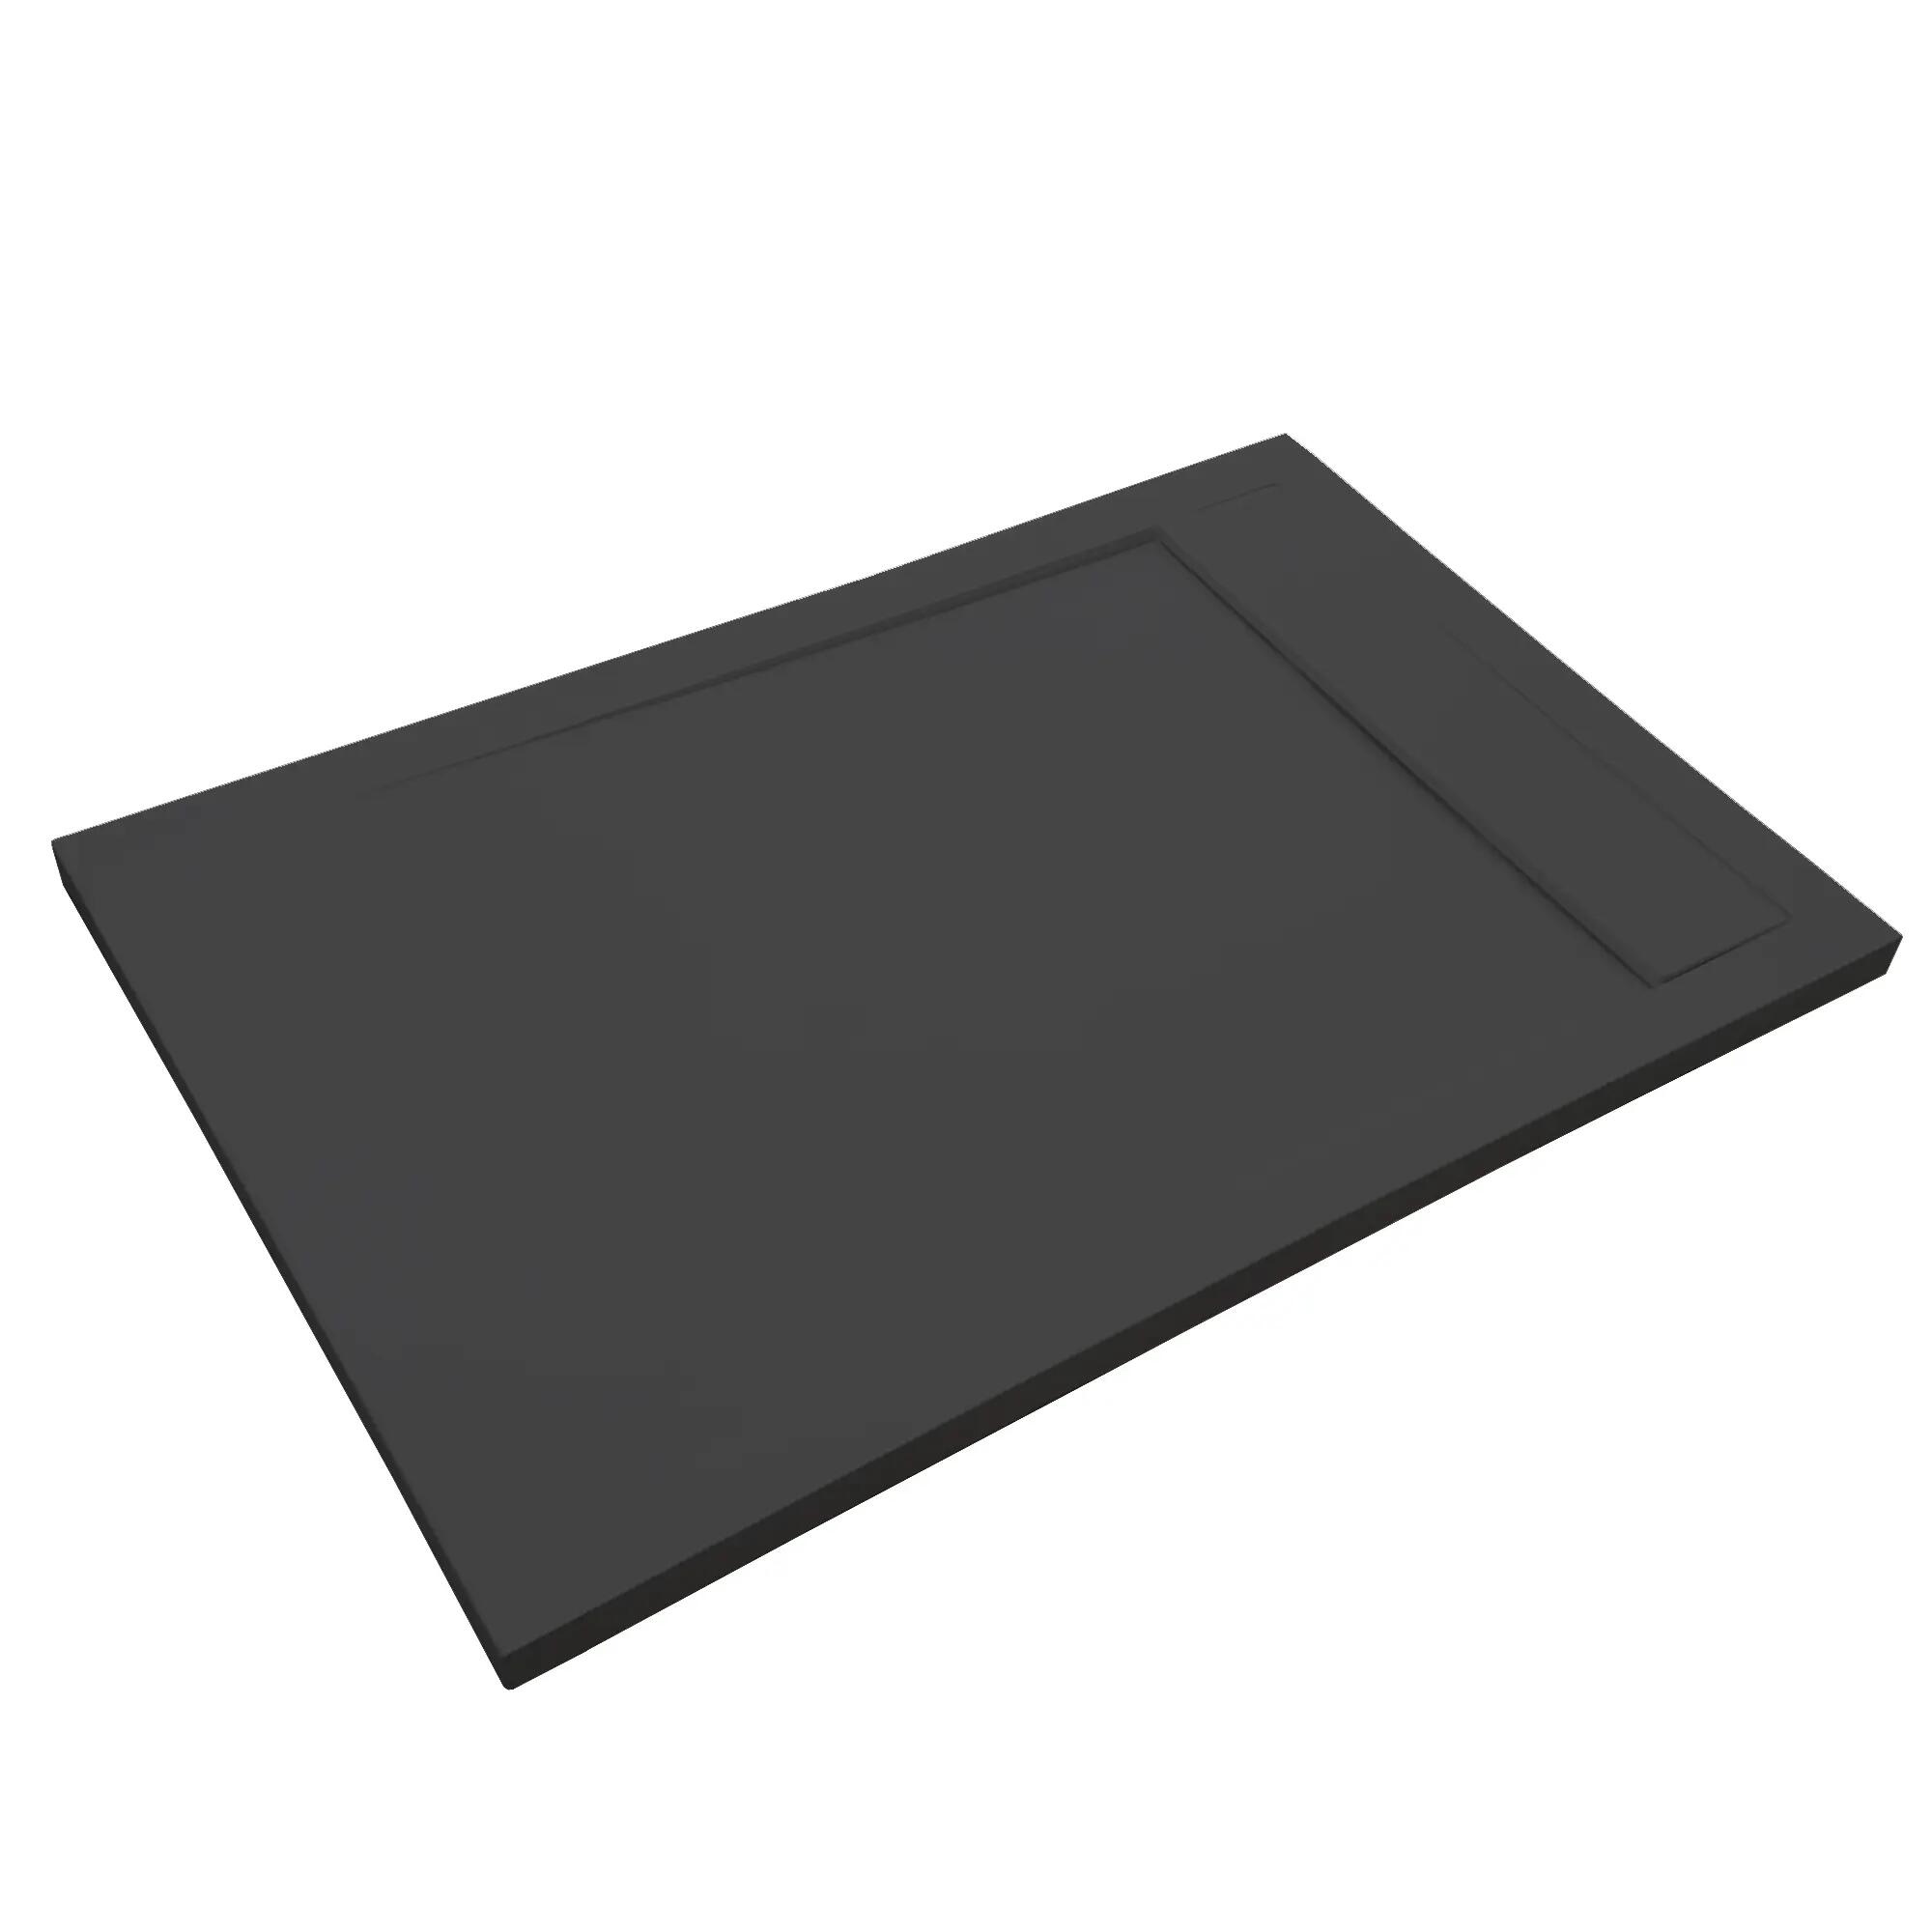 Plato de ducha new york 100x80 cm negro